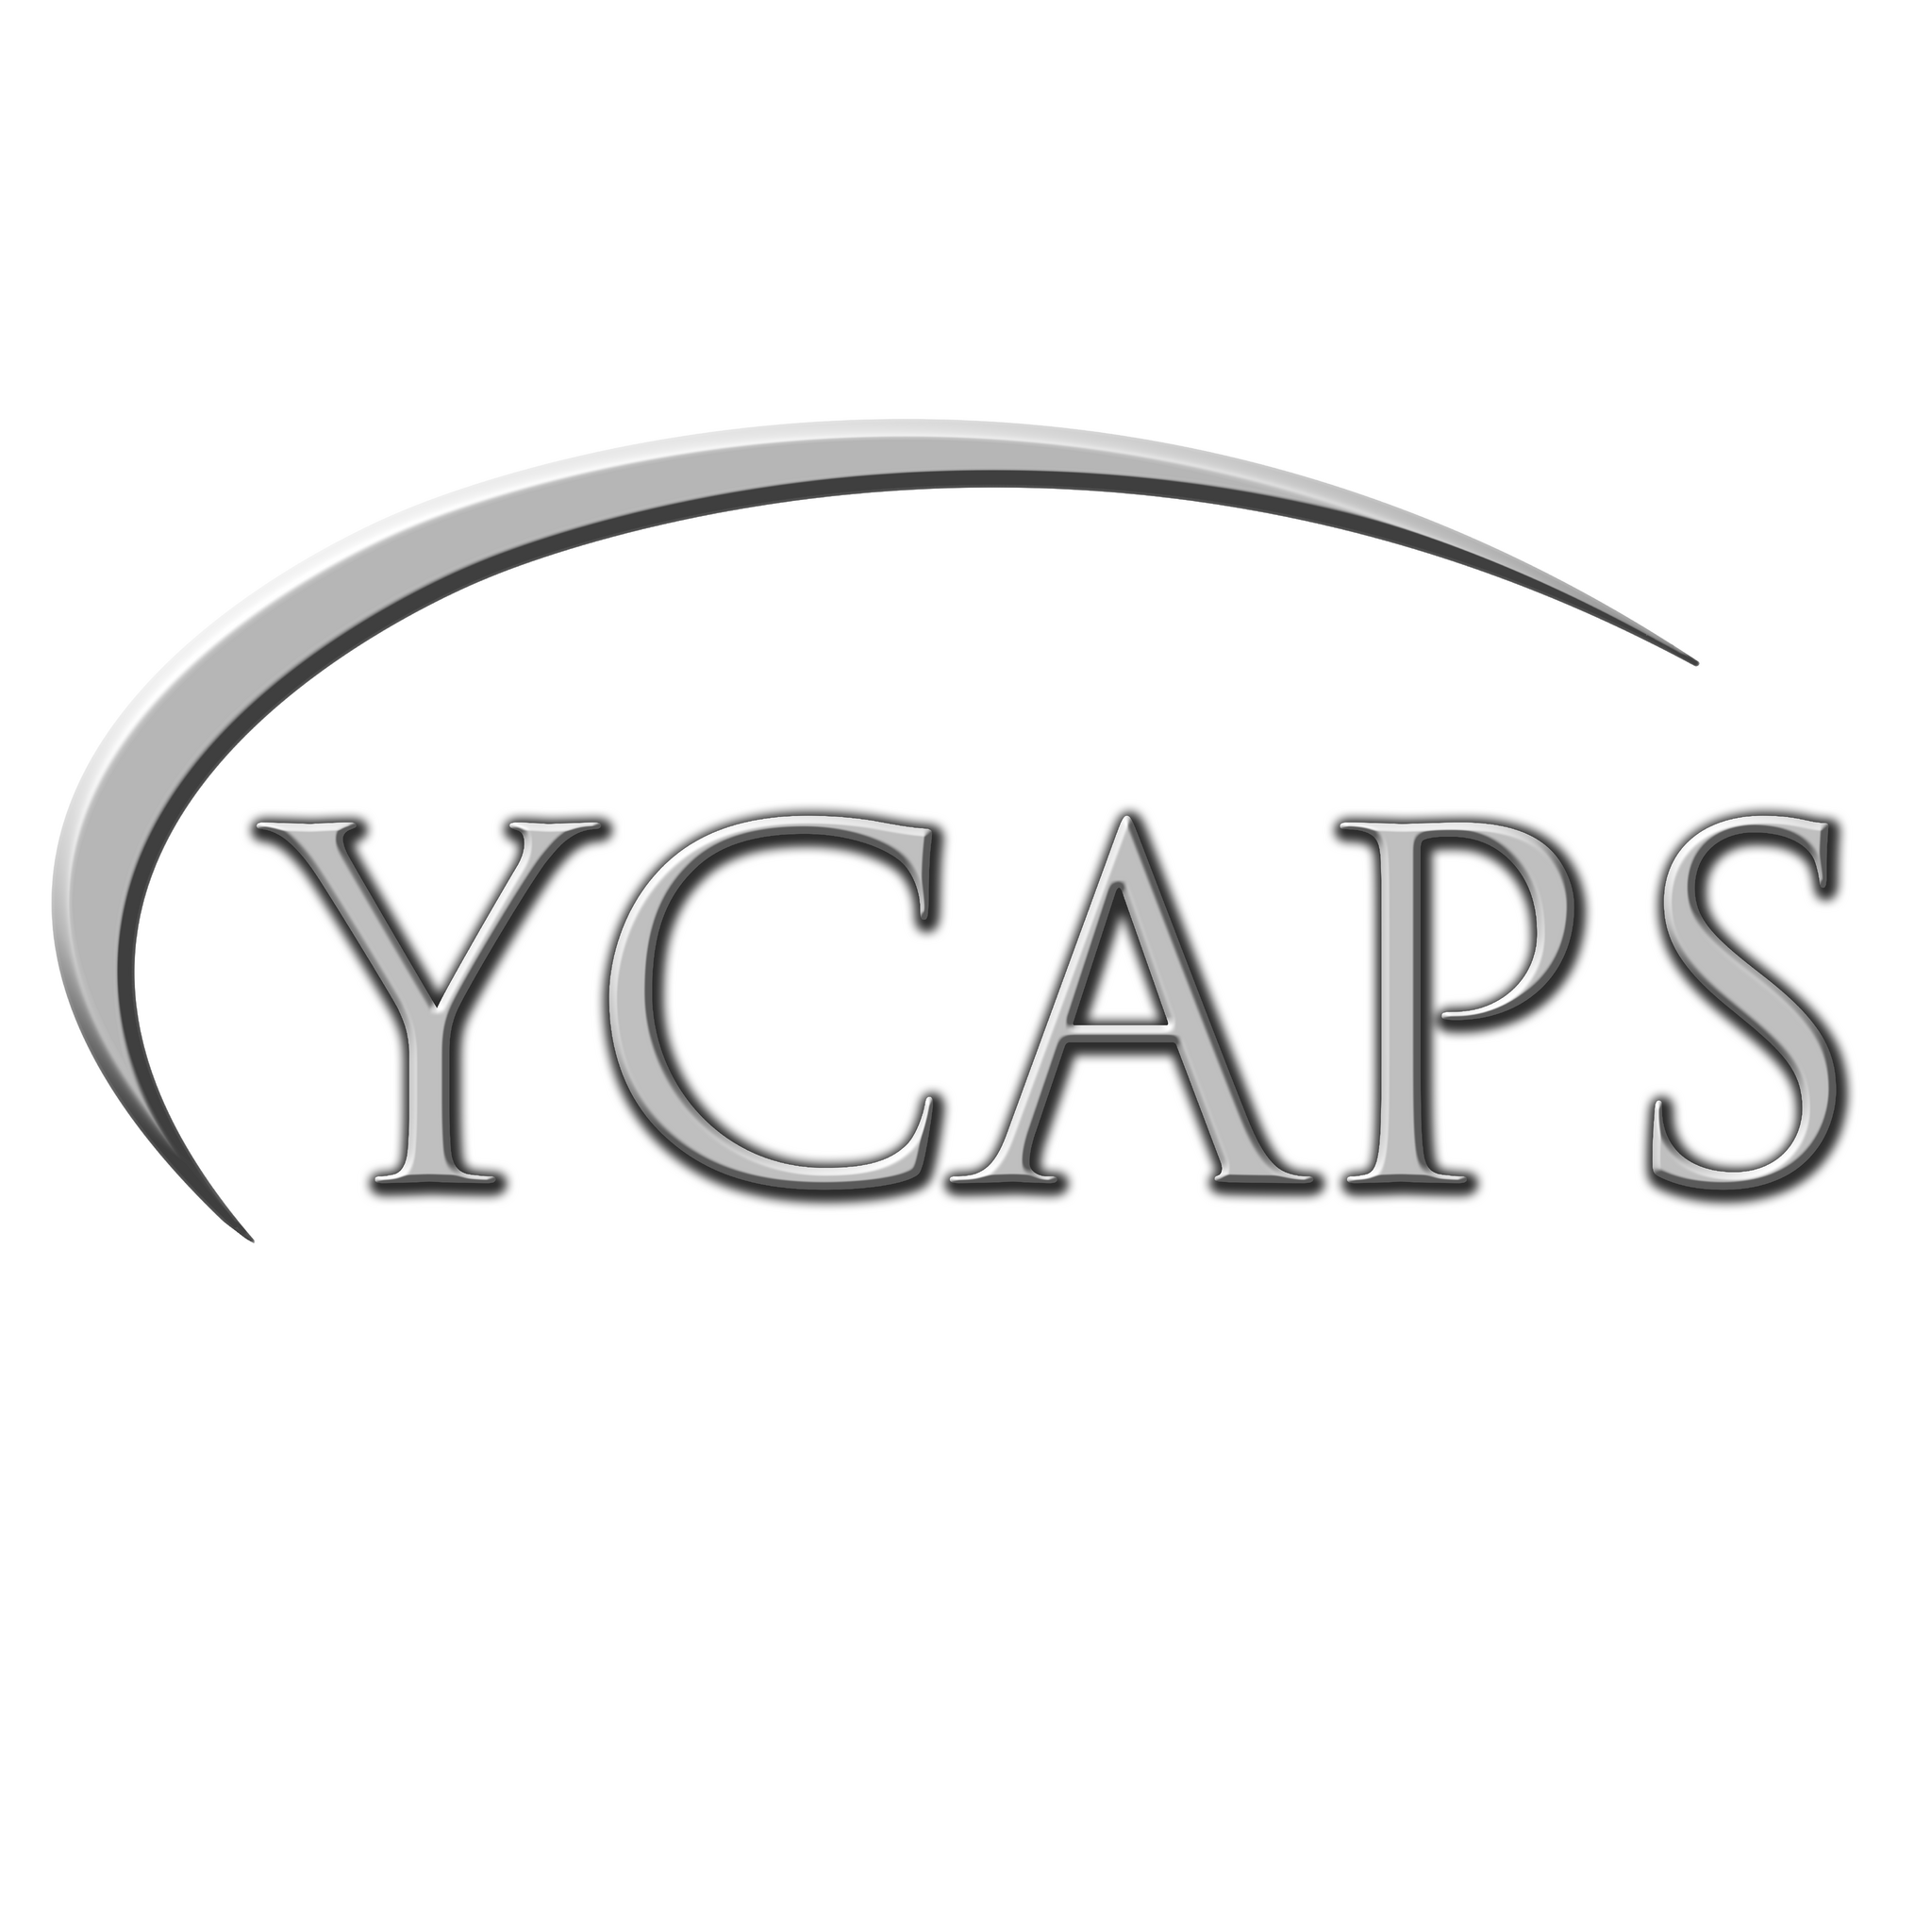 YCAPS